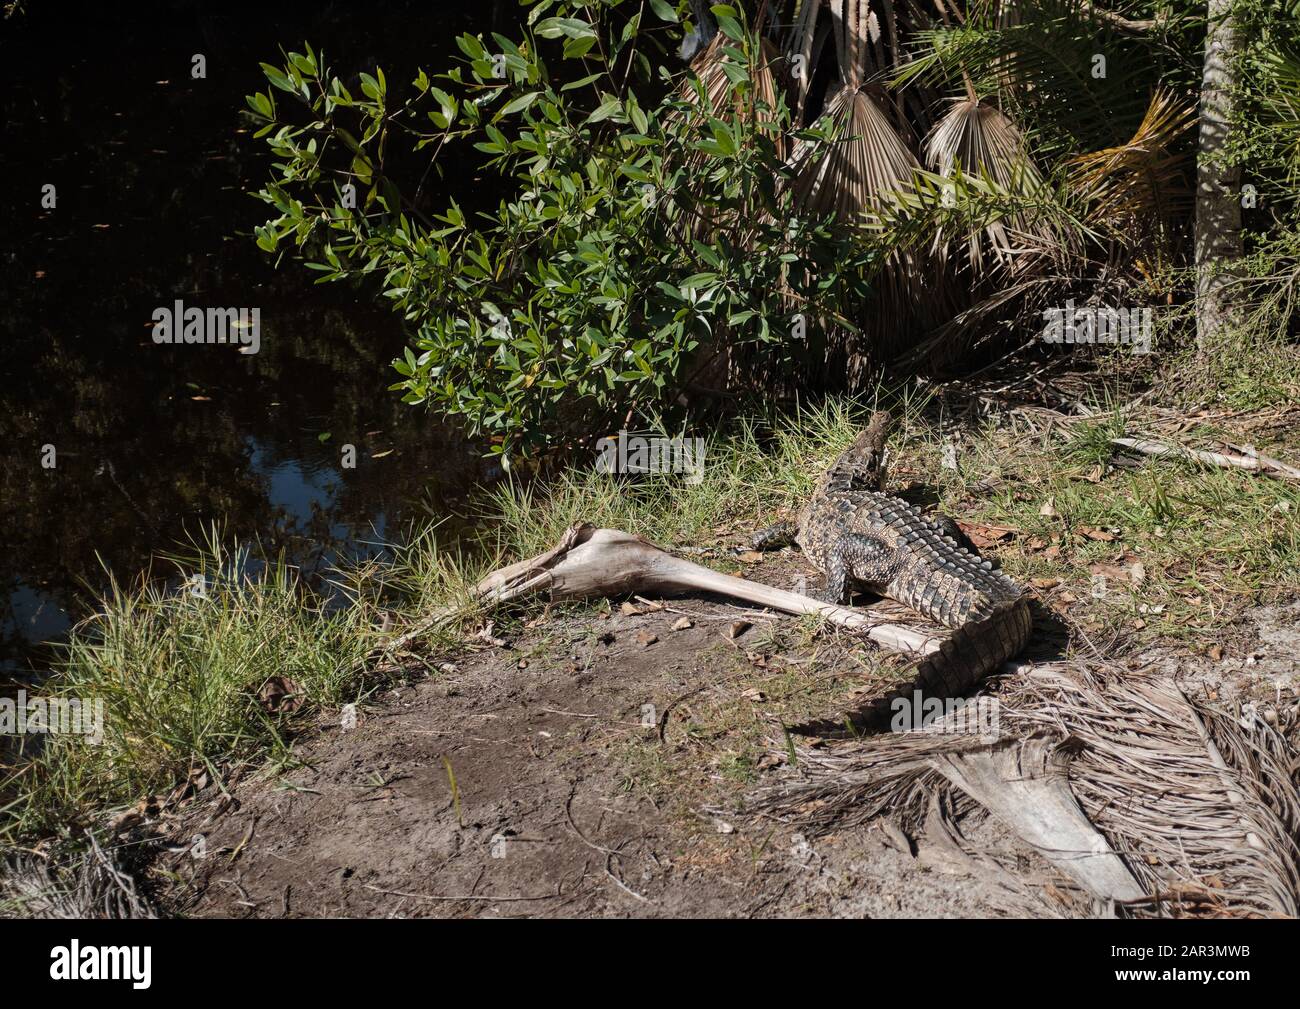 American crocodile in coastal area of South Florida (Crandon park, Key Biscayne, Miami, Florida) Stock Photo